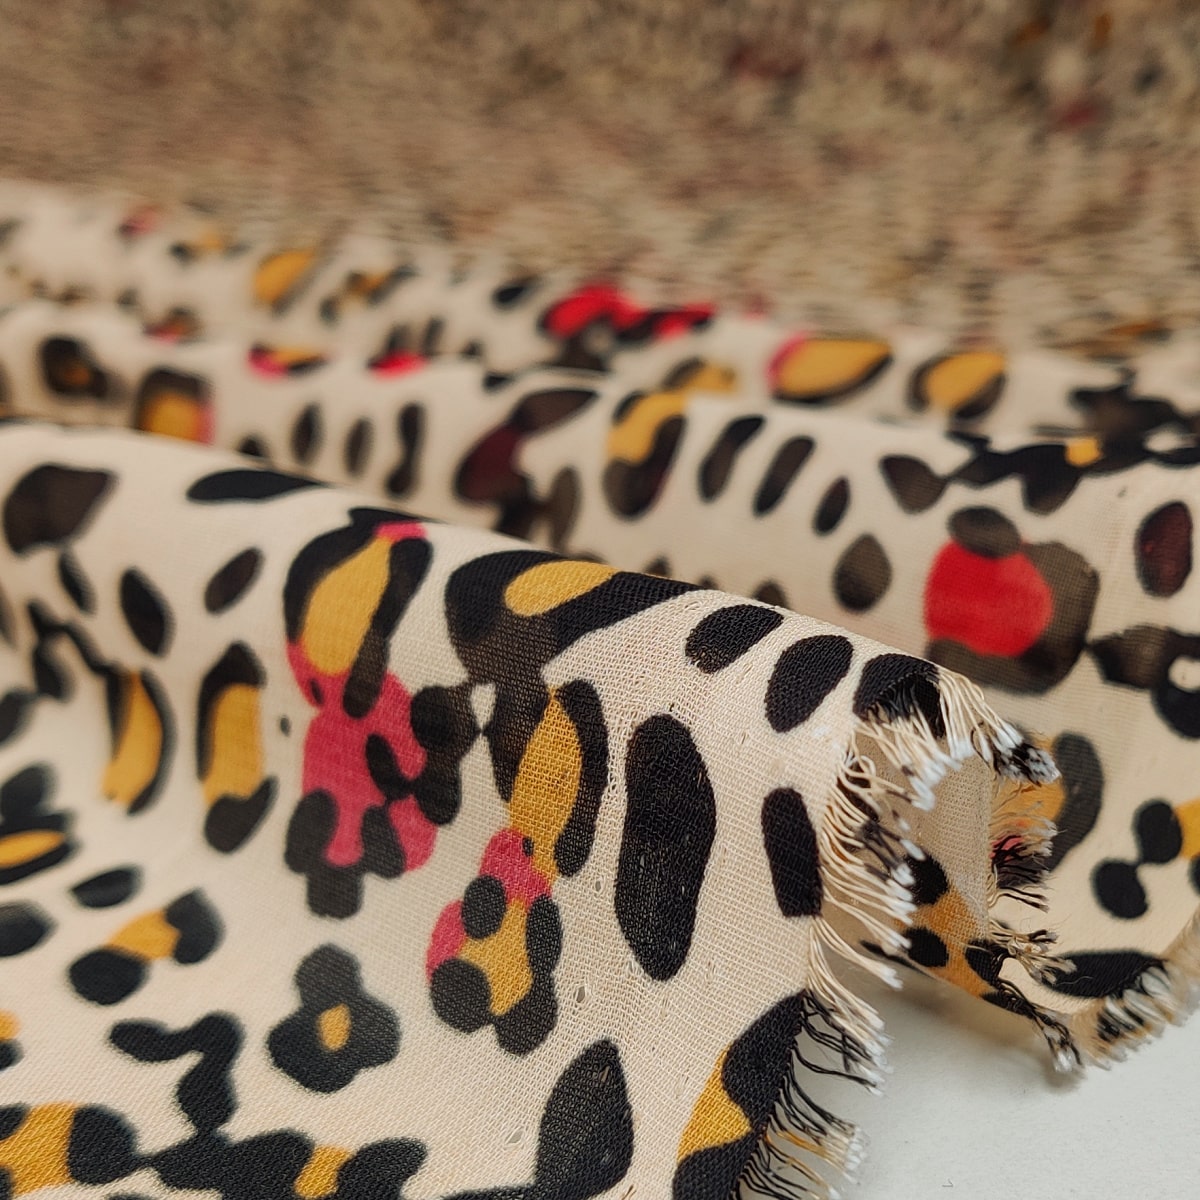 Chiffon Fabric | Leopard